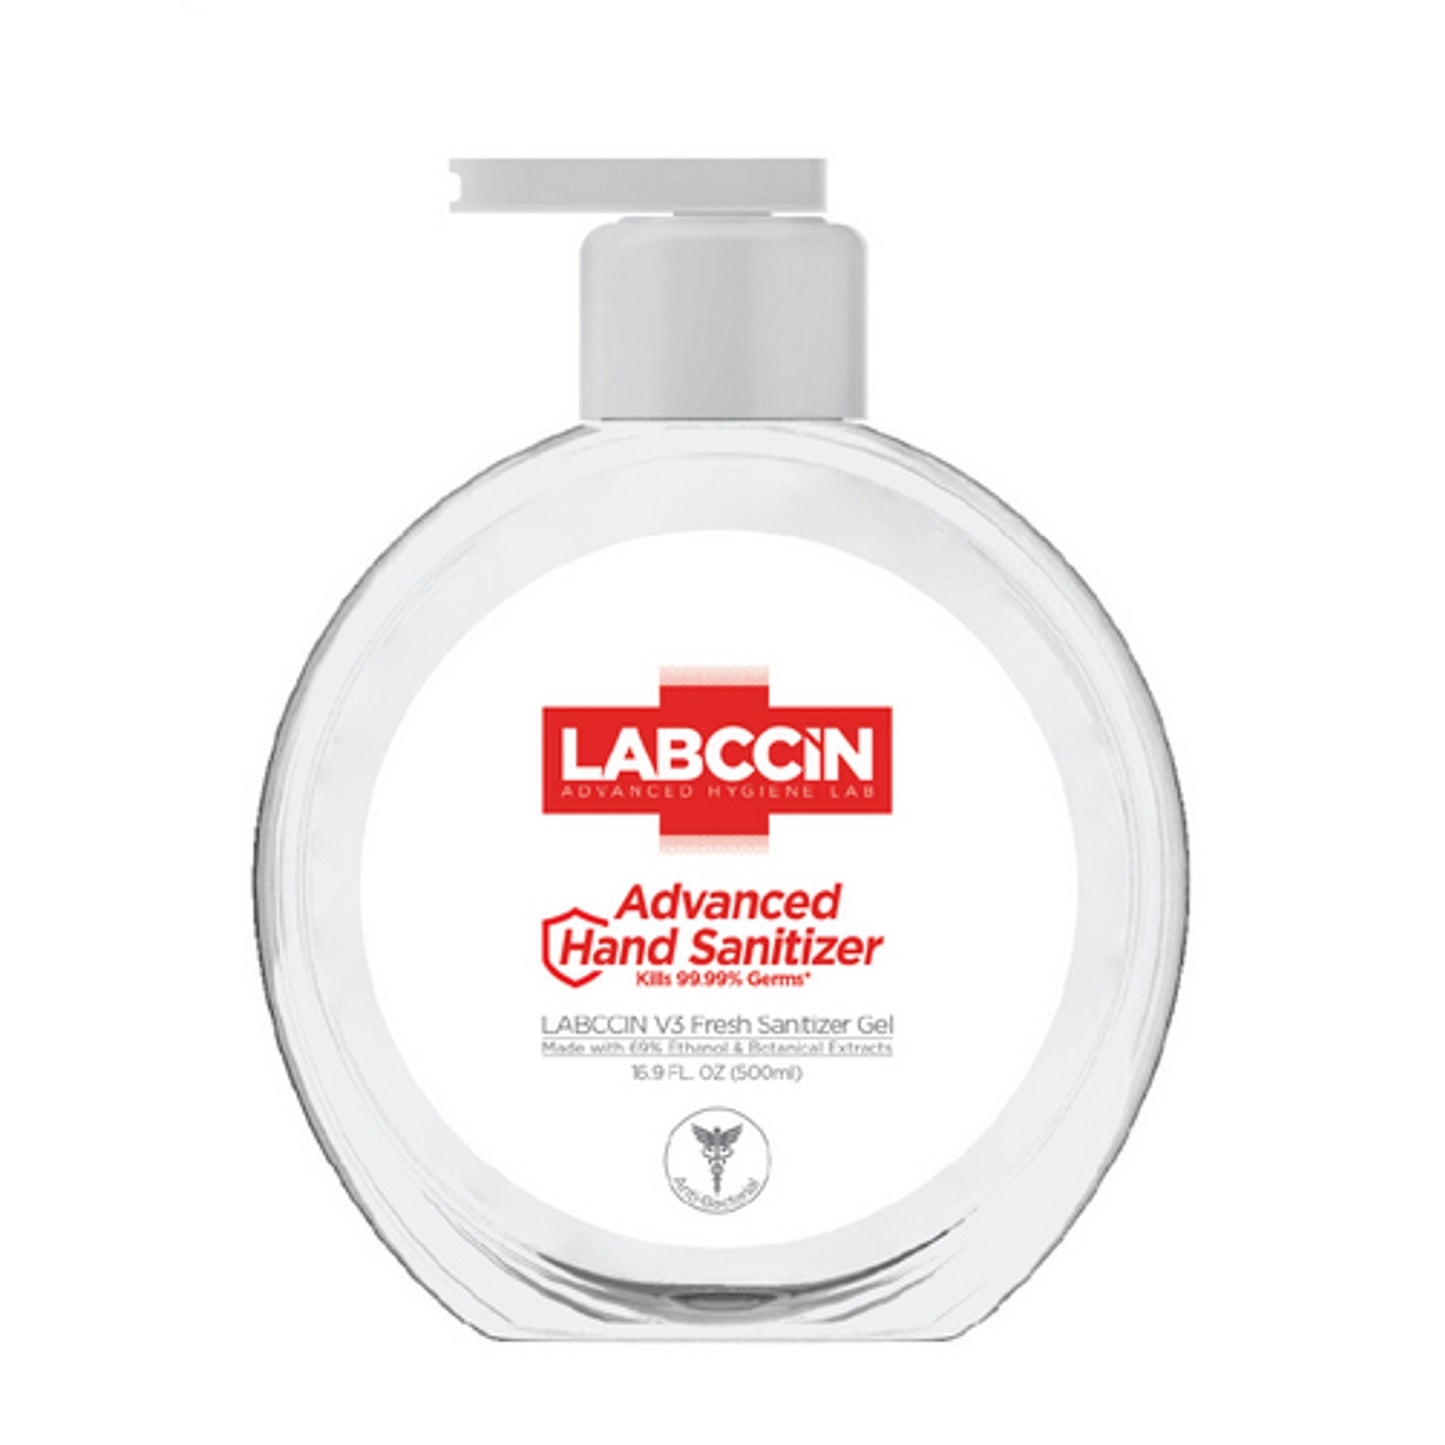 Labccin Advanced Hand Sanitizer - 16oz